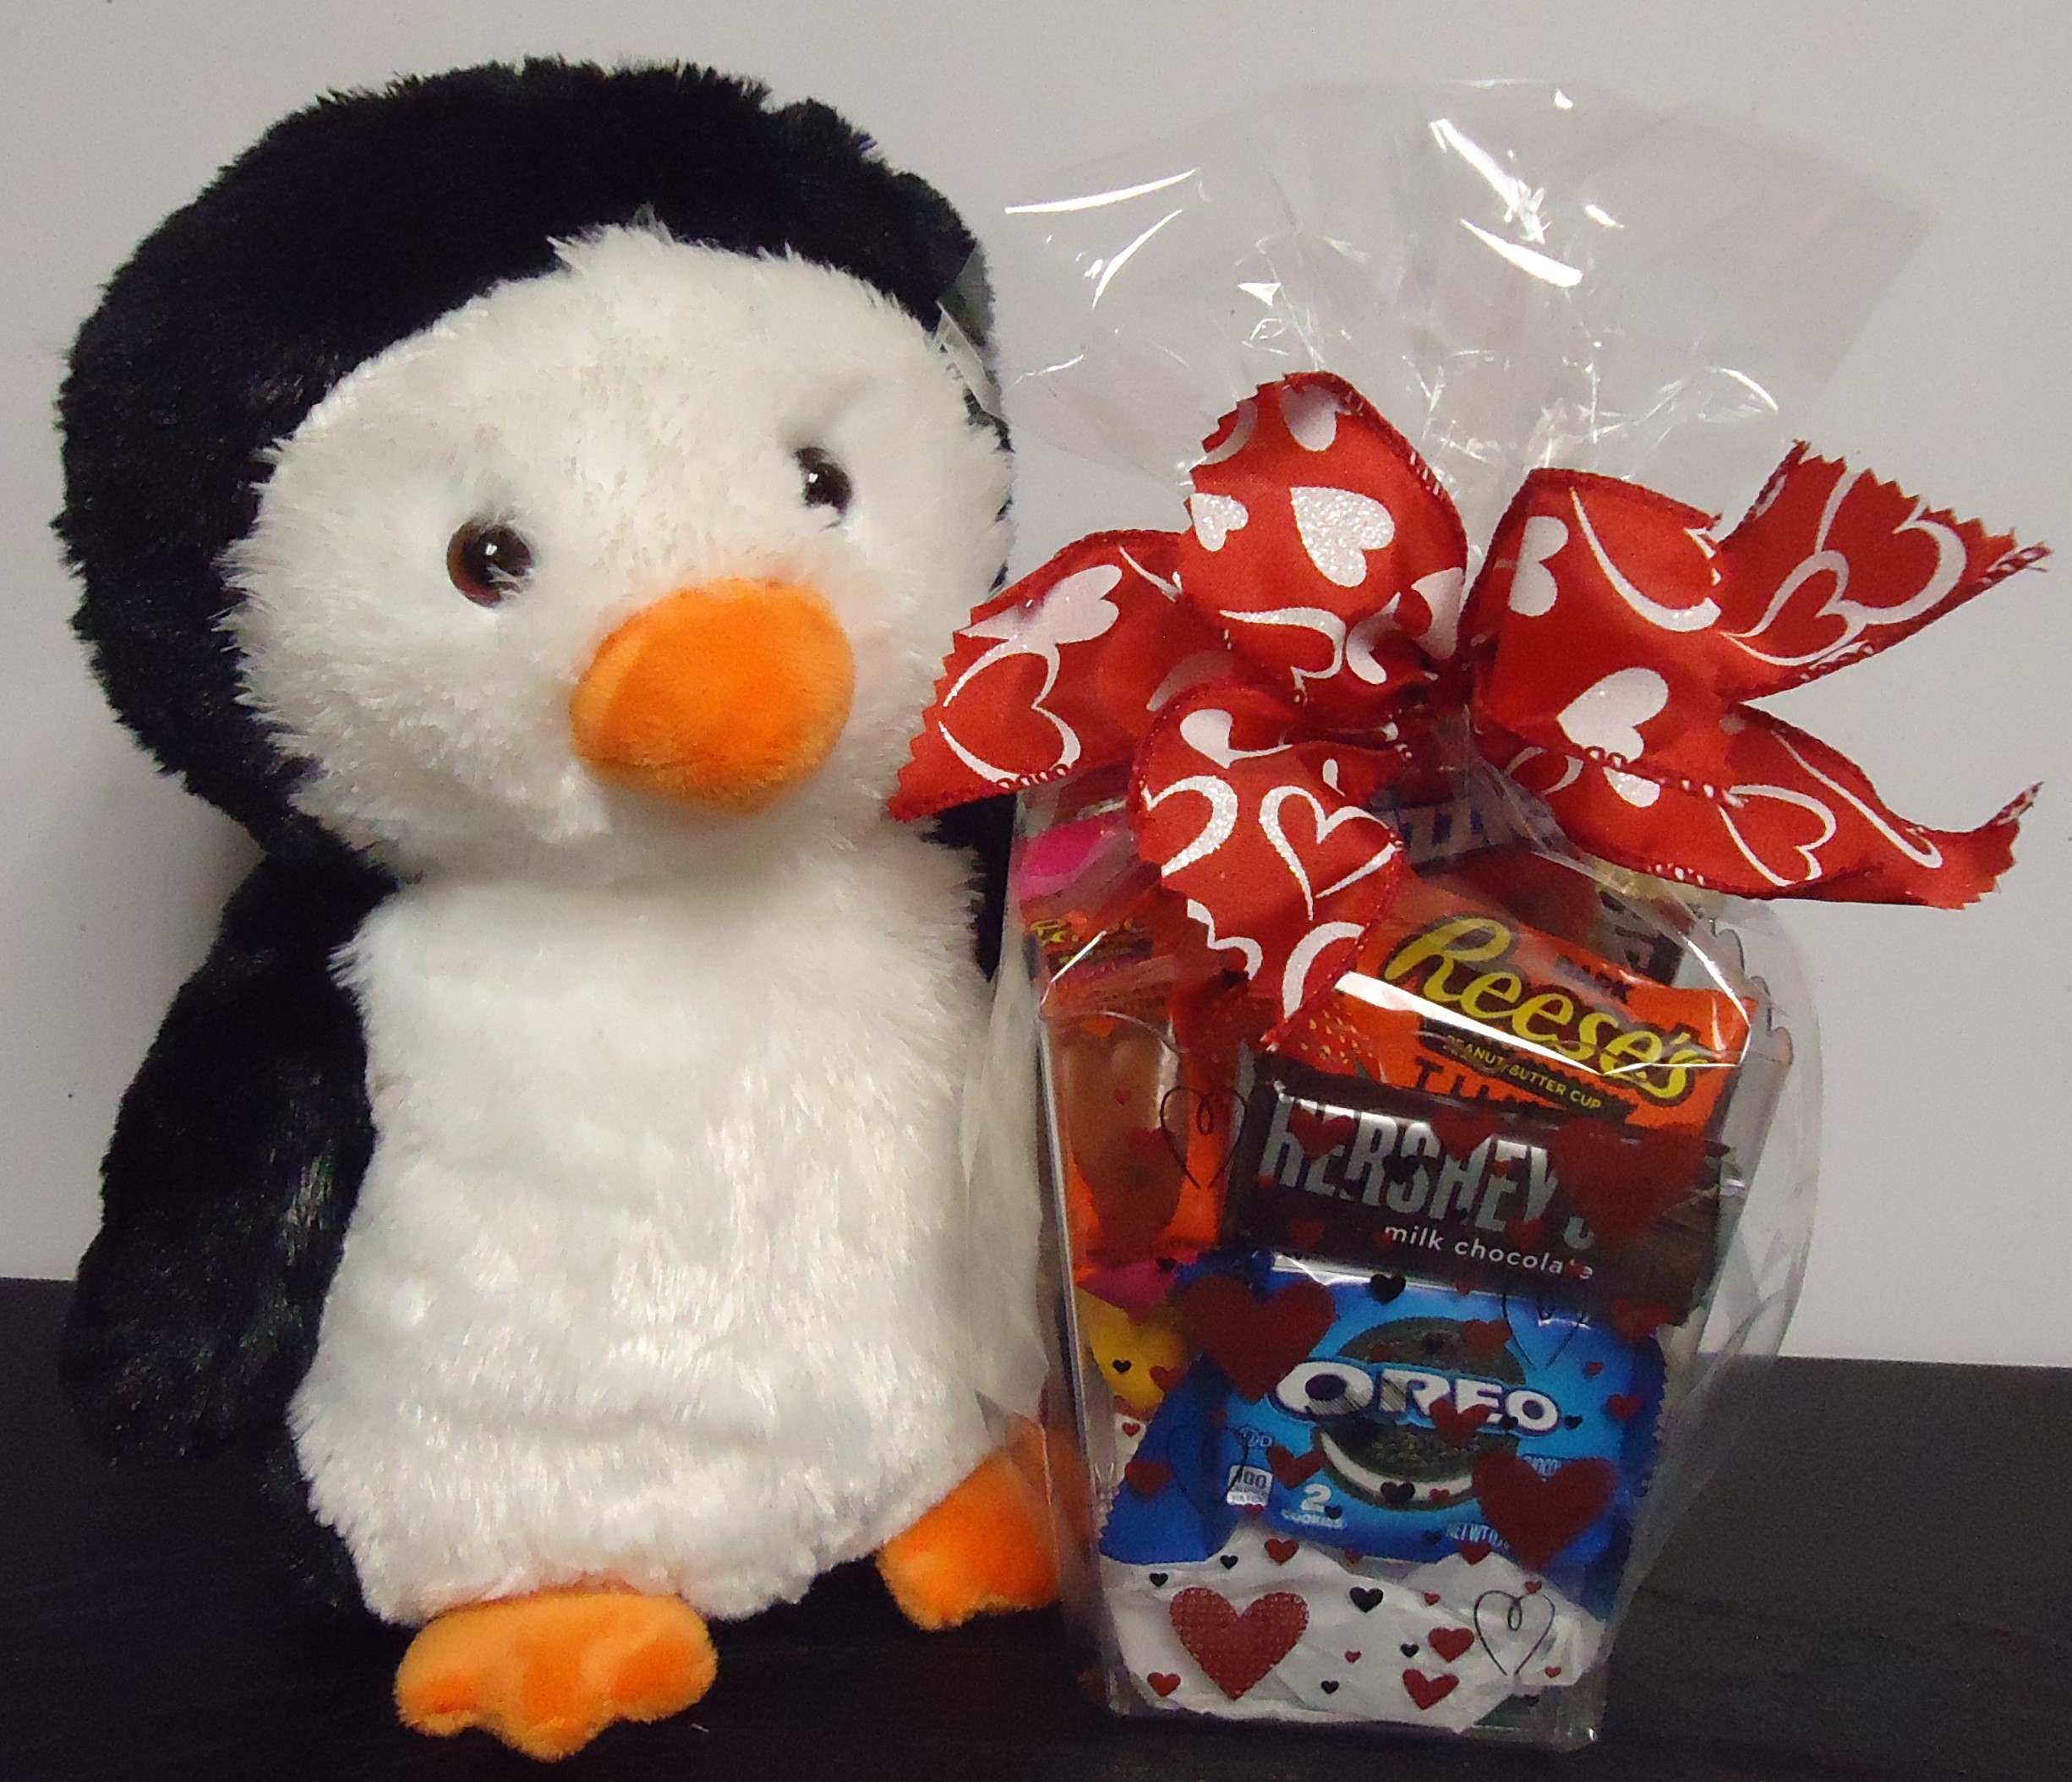 (12) Plush Penguin W/ 
Goodie Box
$35.00